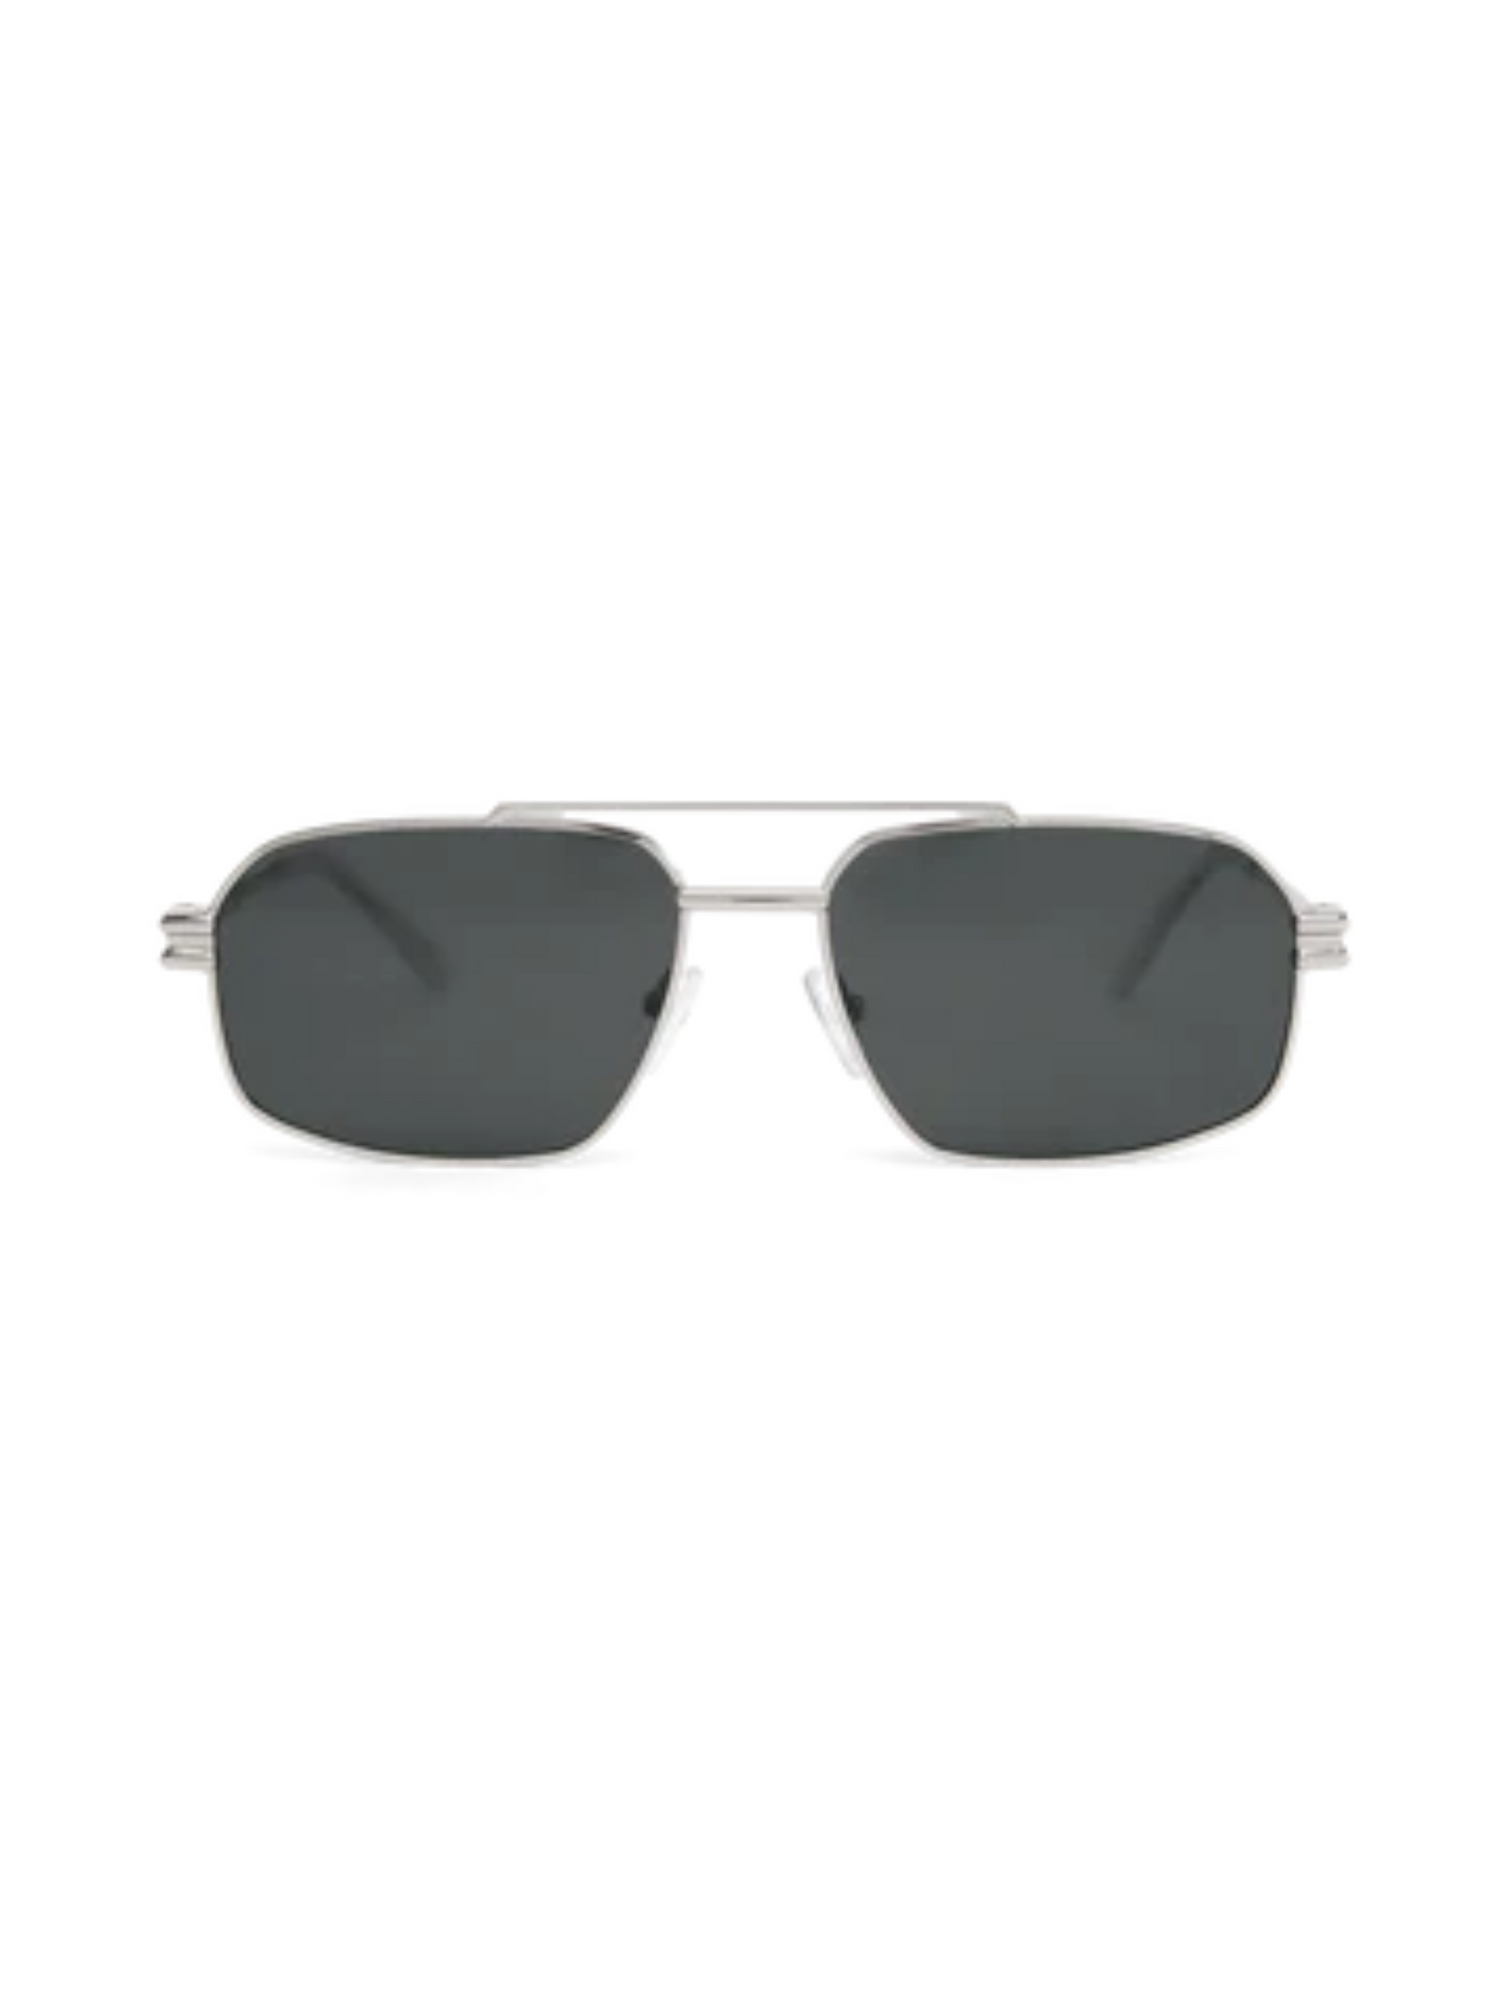 silver metal frame aviator polarized sunglasses